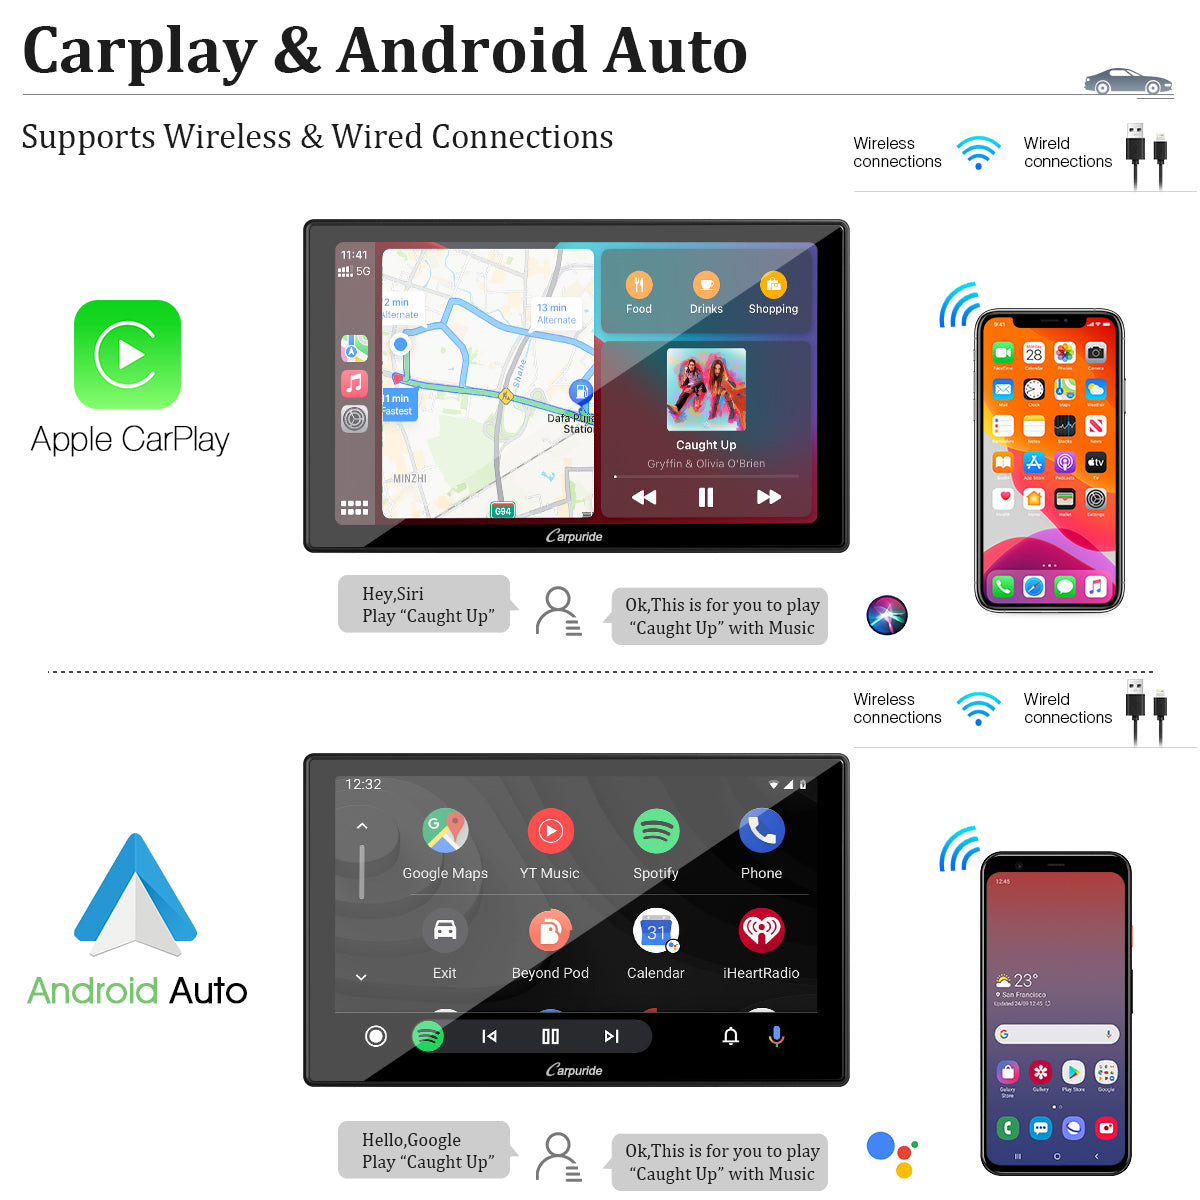 Carpuride 9 Car Stereo Wireless Apple Carplay/Android Auto Touch Screen BT  FM